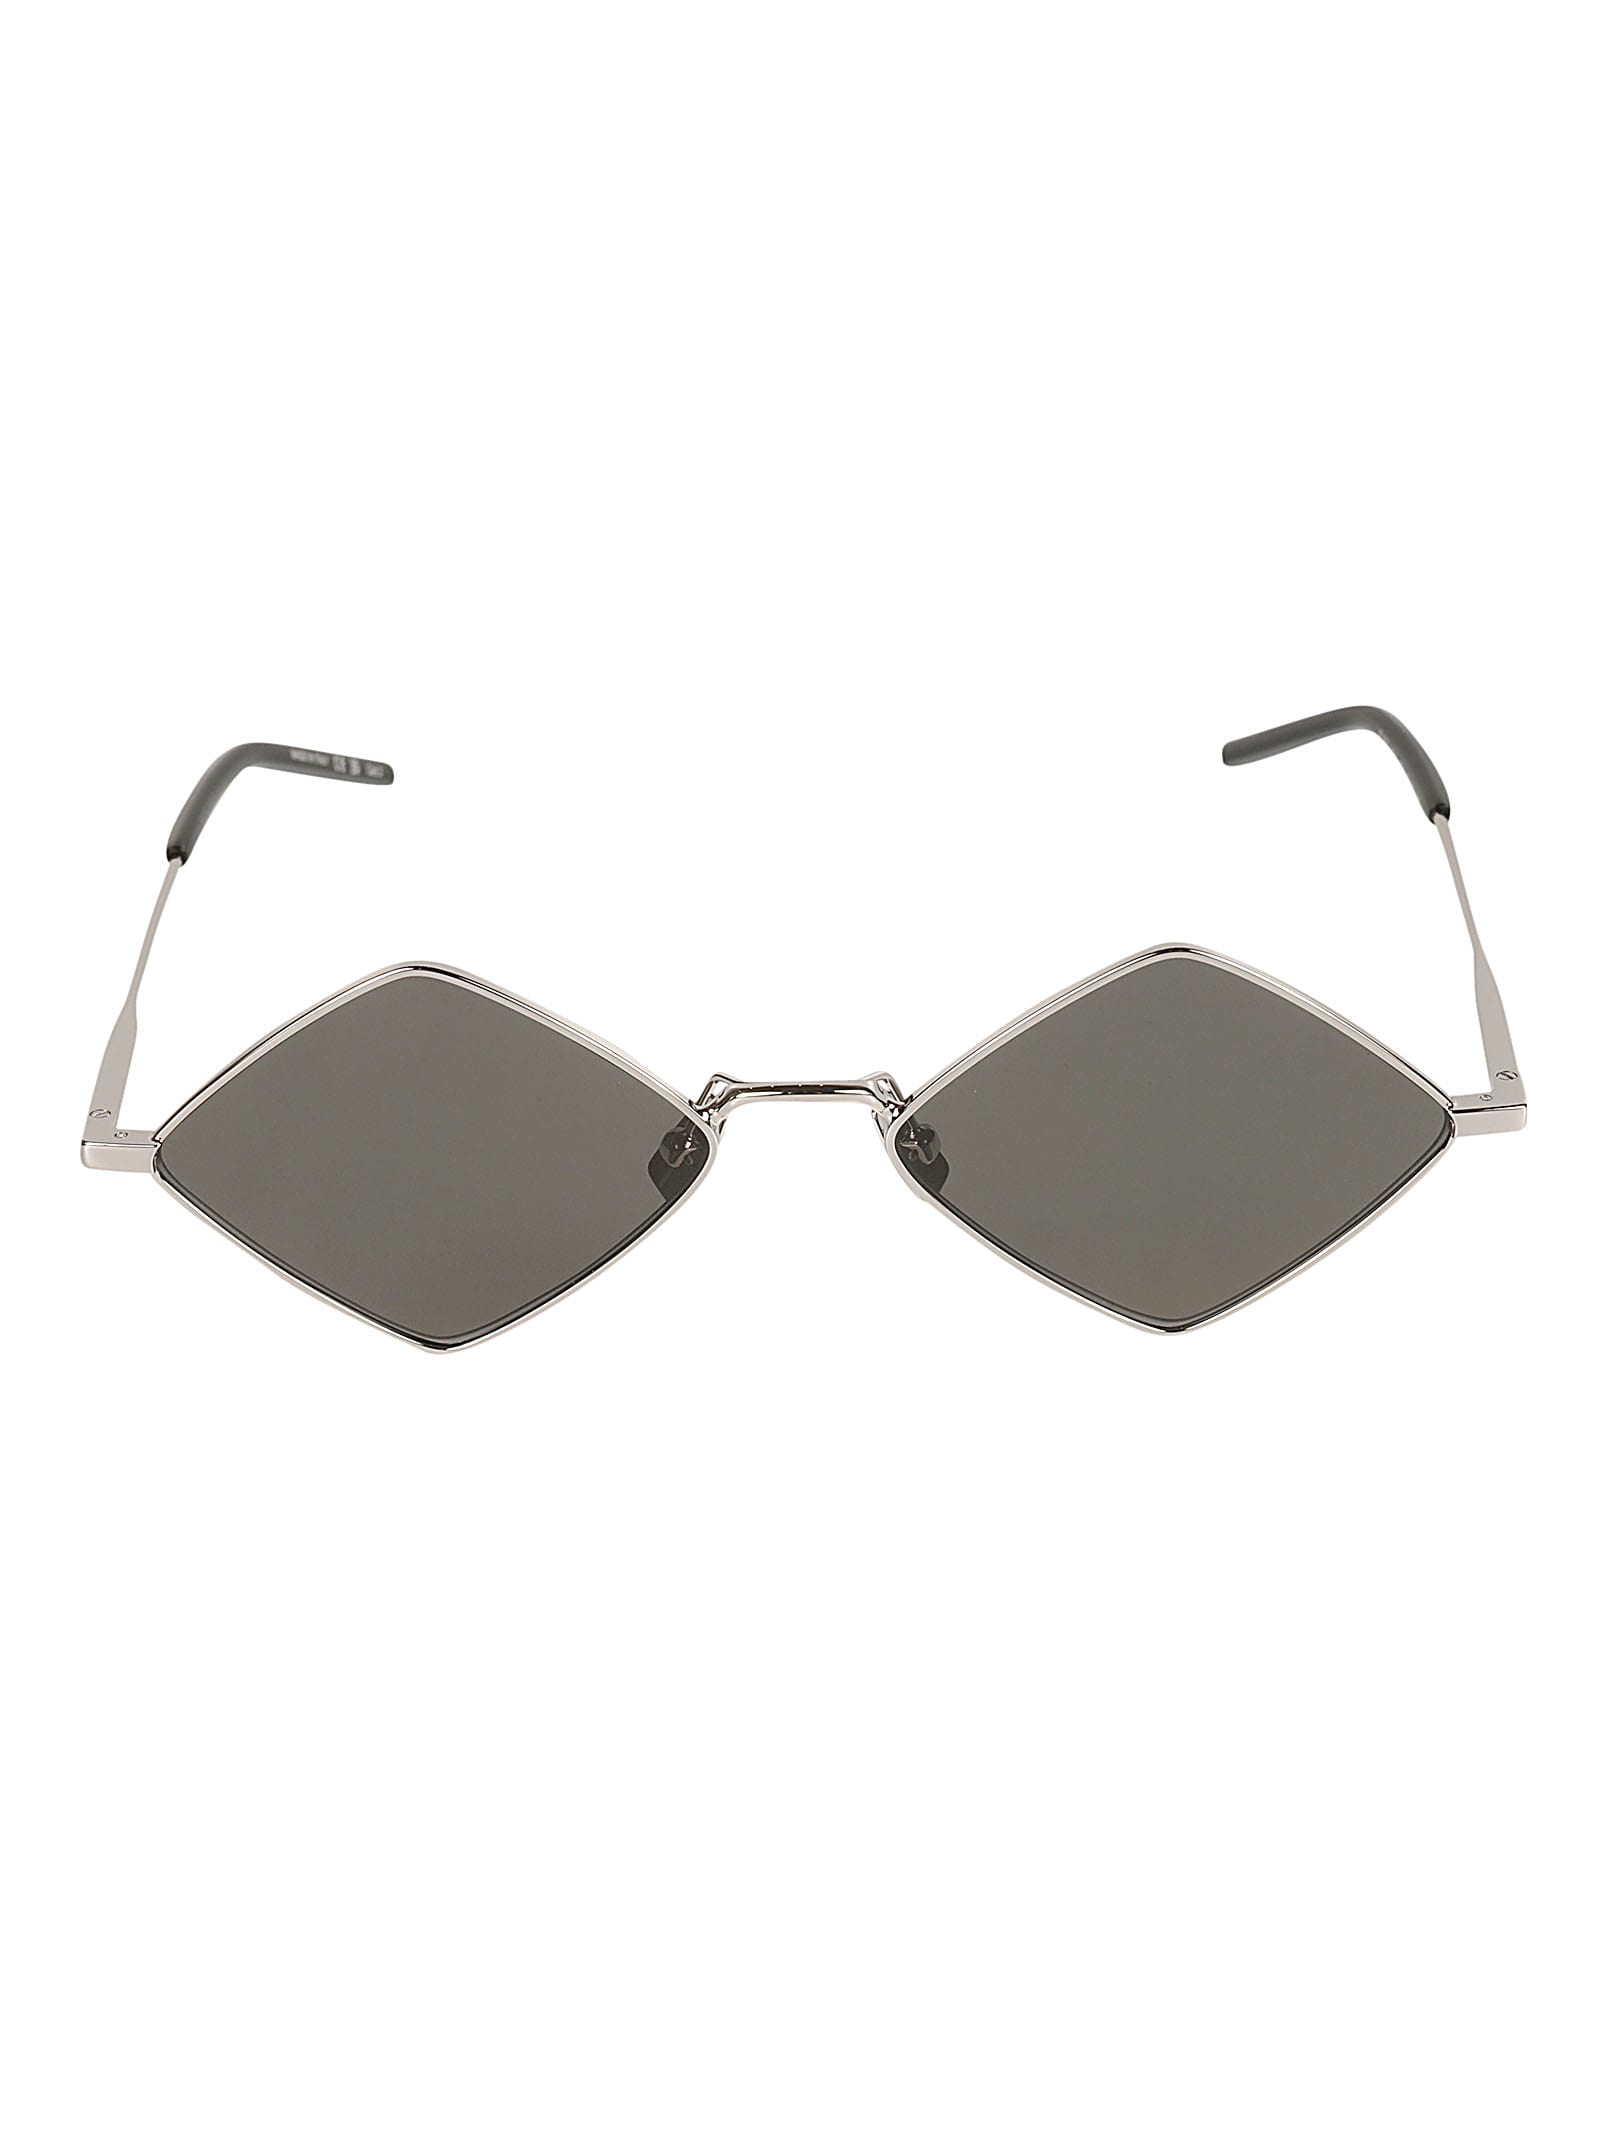 Saint Laurent Diamond Frame Sunglasses In Silver/grey